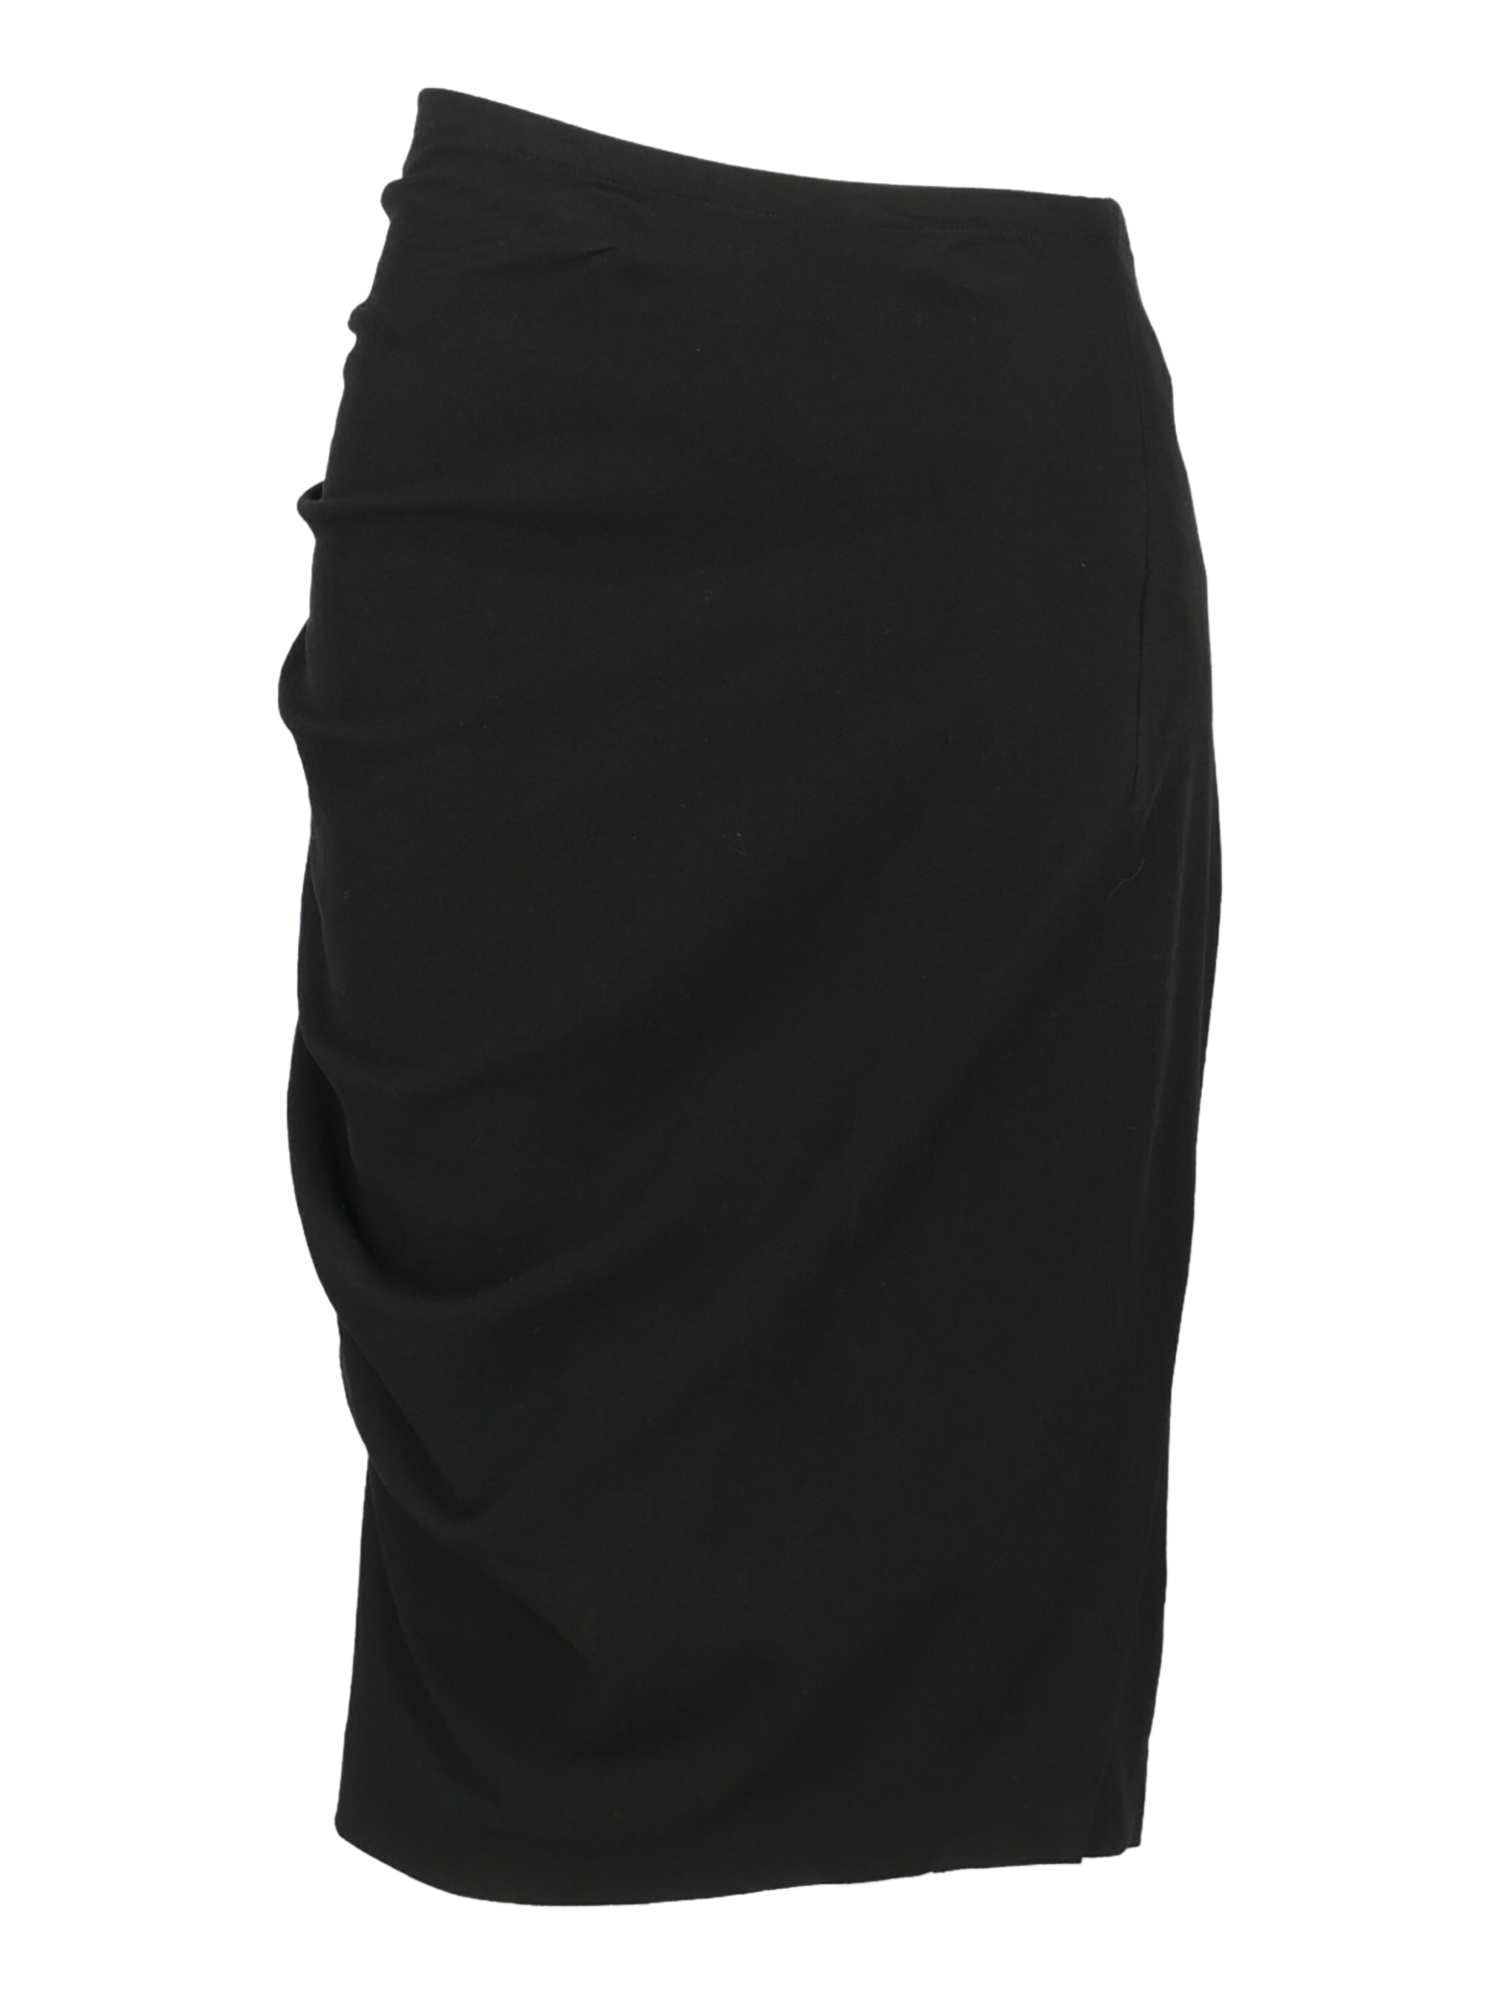 Damen Röcke -  - In Black Fabric - Größe:  -